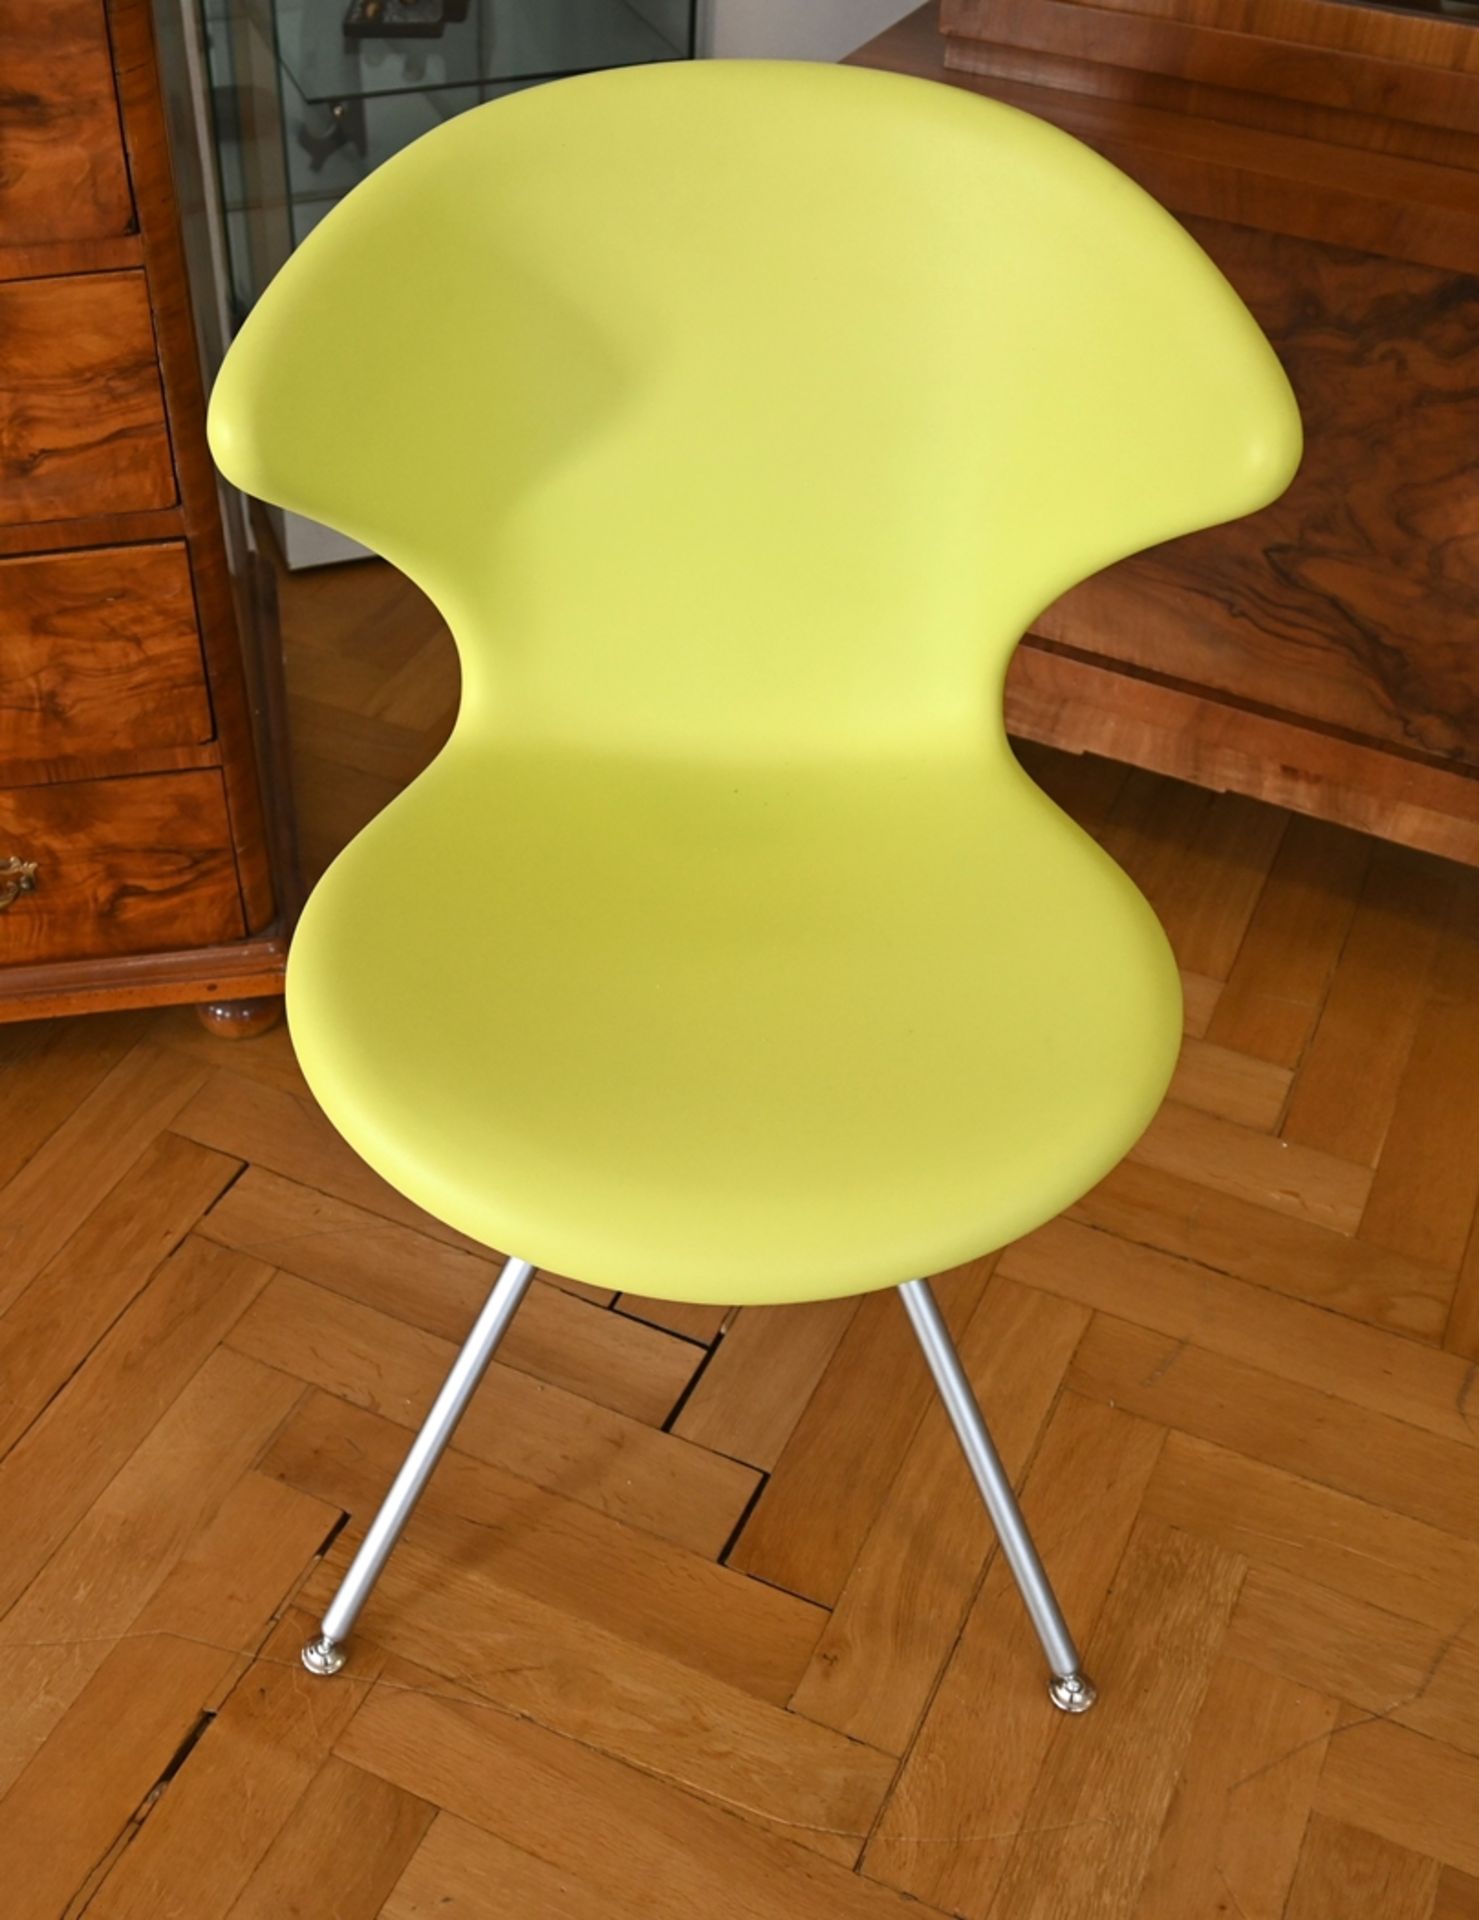 Design chair, Tonon Concept 902 with metal feet, curved shape, design Martin Ballendat (1958 Bochum - Image 4 of 5